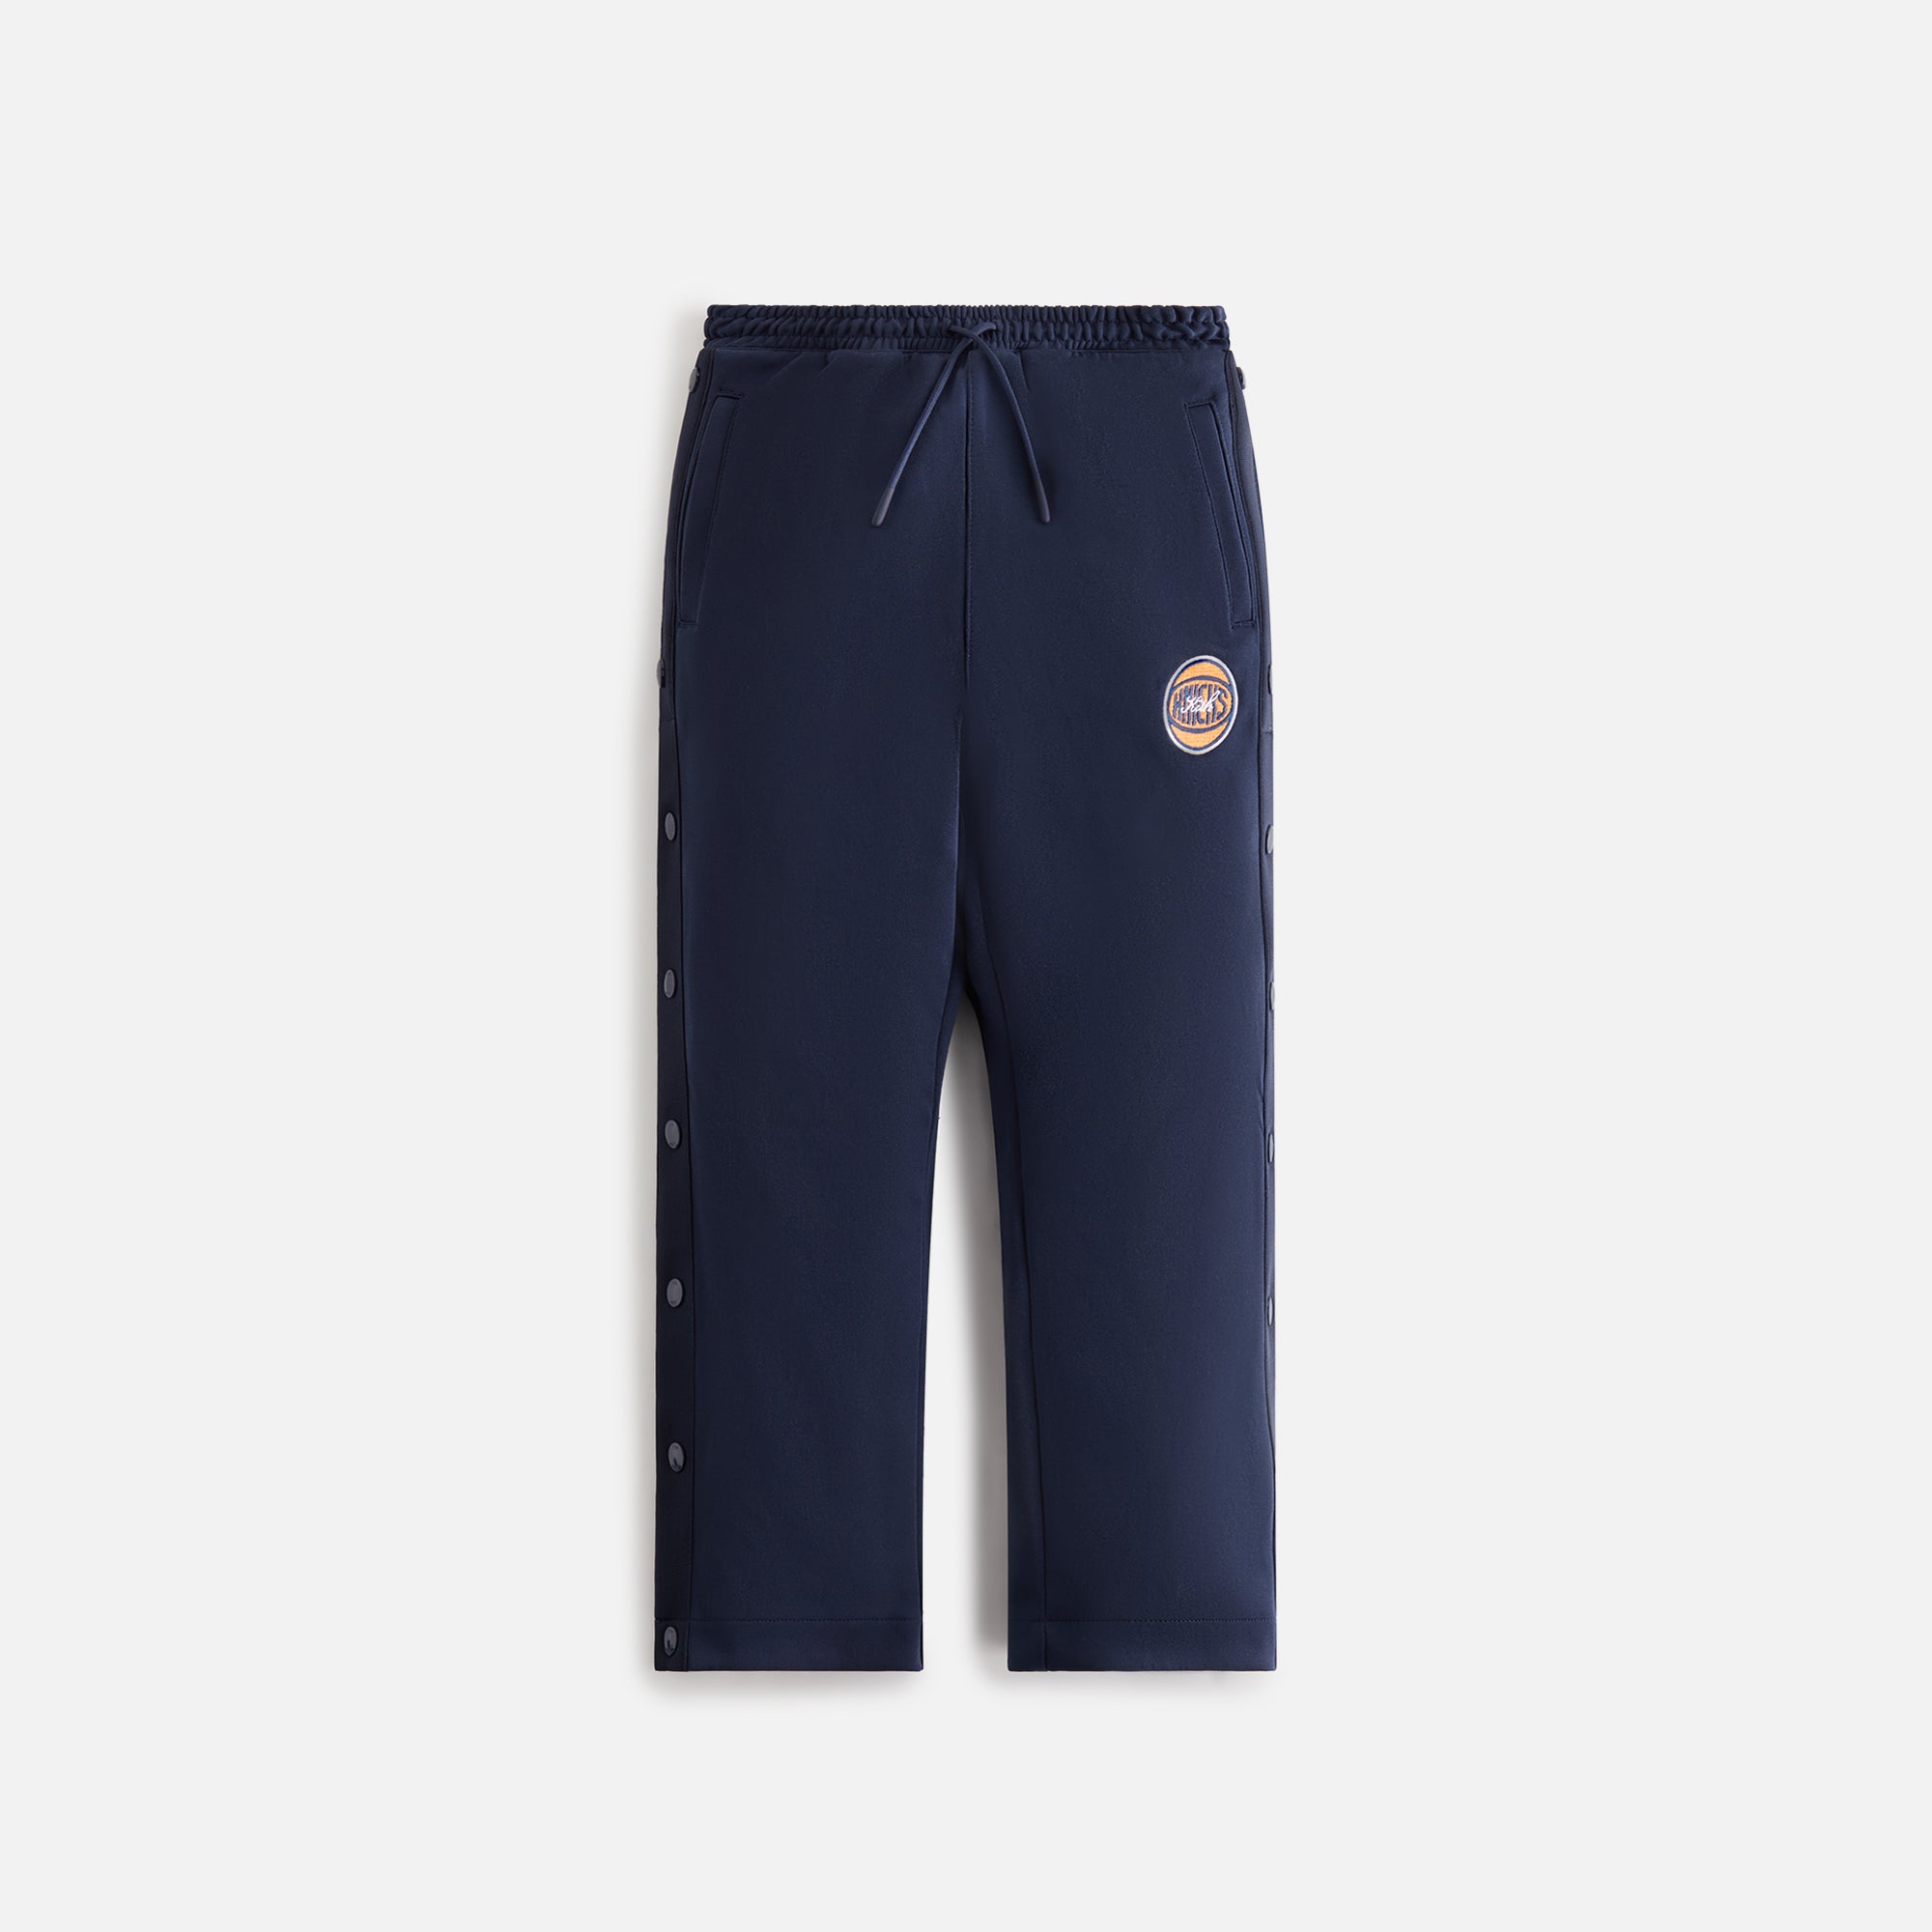 Auyz Men's Youth Boys Loose Fit Tear-Away Pants Snap Button Sports Running  Basketball Sweatpants, Blue, 4XS : Amazon.co.uk: Sports & Outdoors